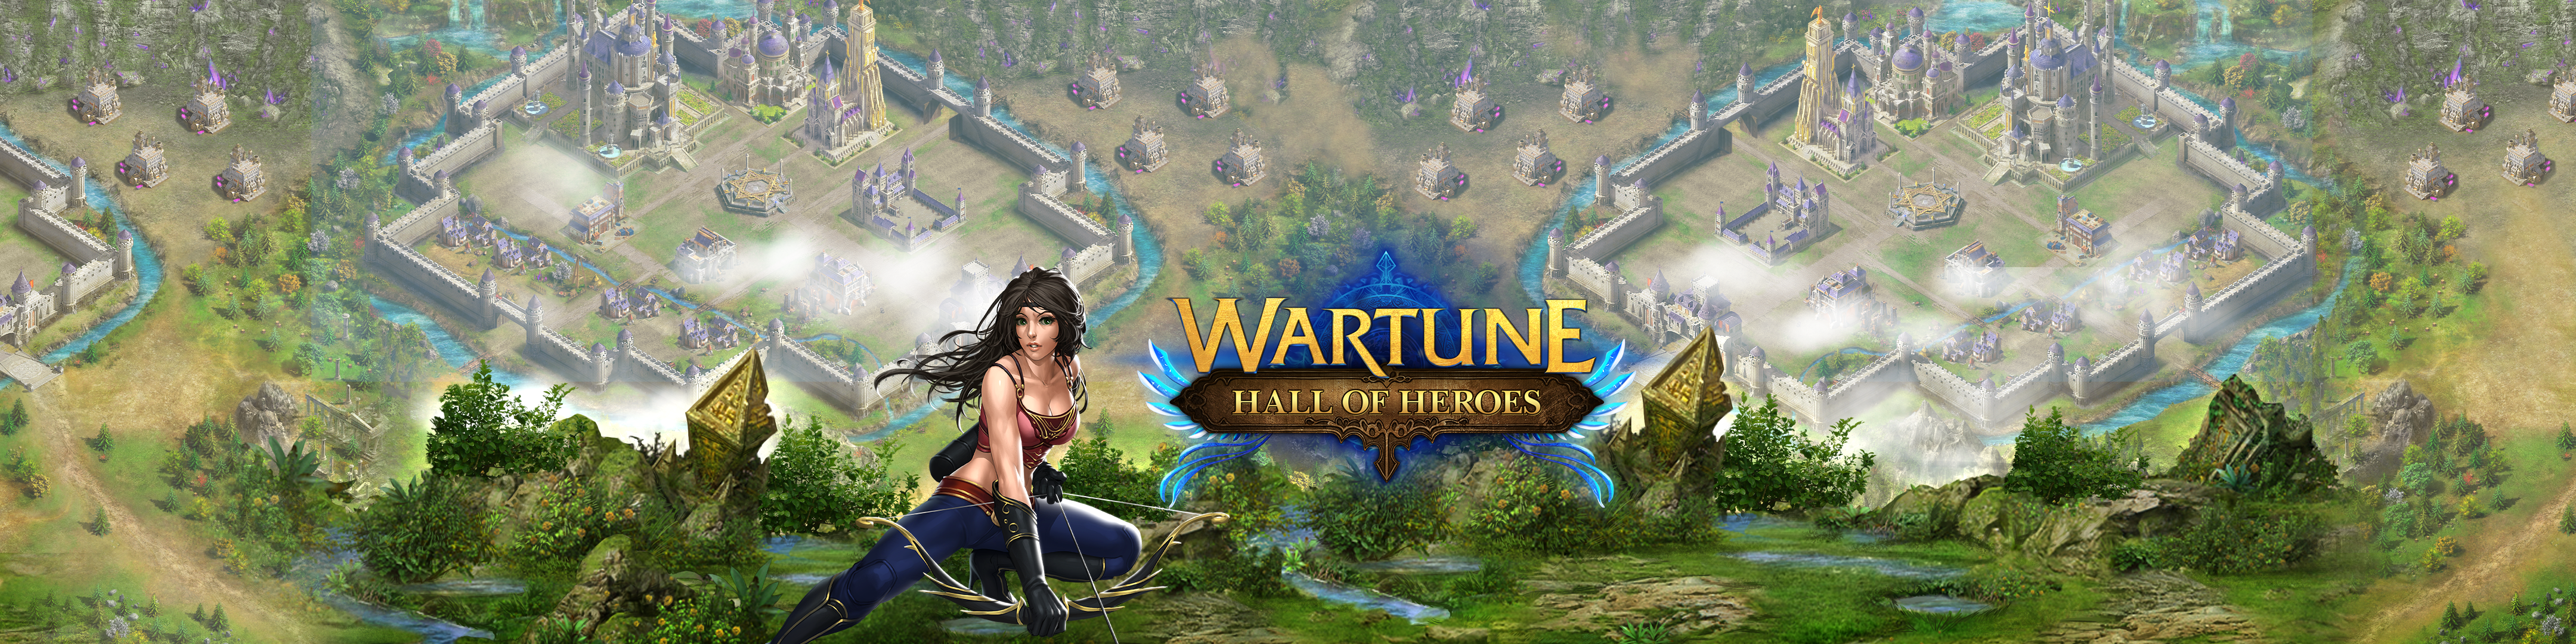 Wartune Hall Of Heroes Revenue Download Estimates Apple App Store Us